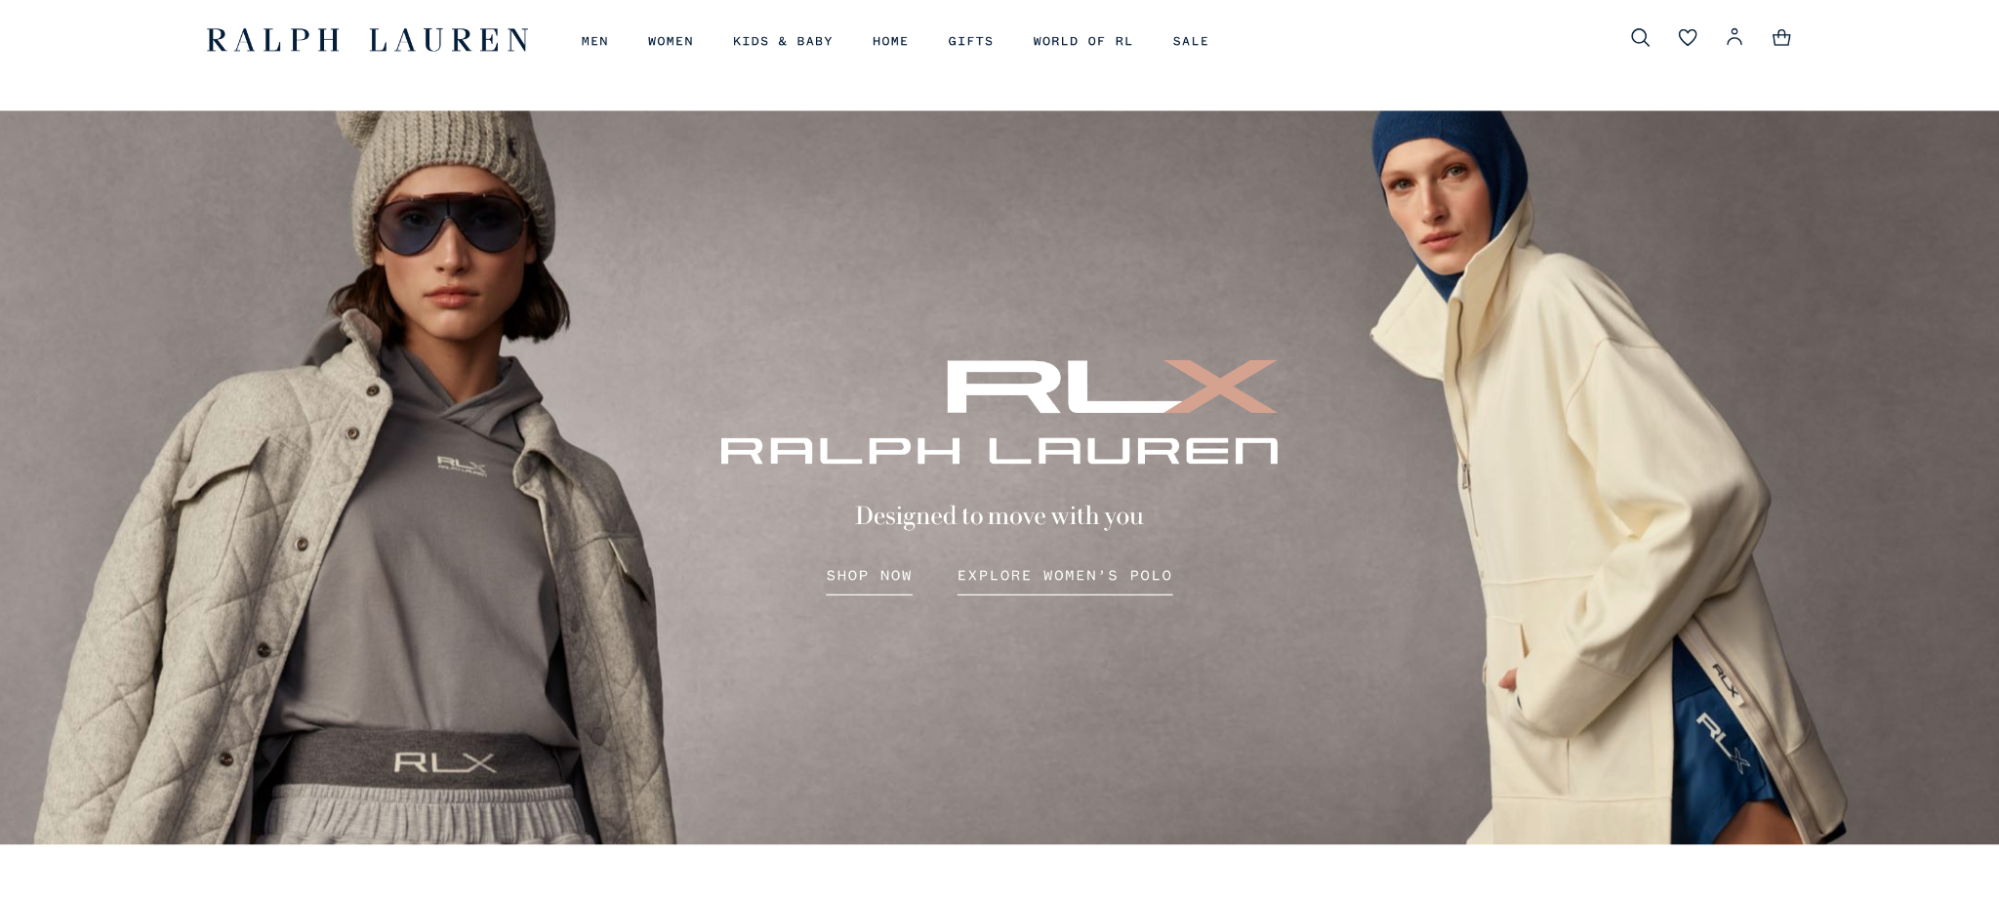 Ralph Lauren headless commerce site headless commerce platforms